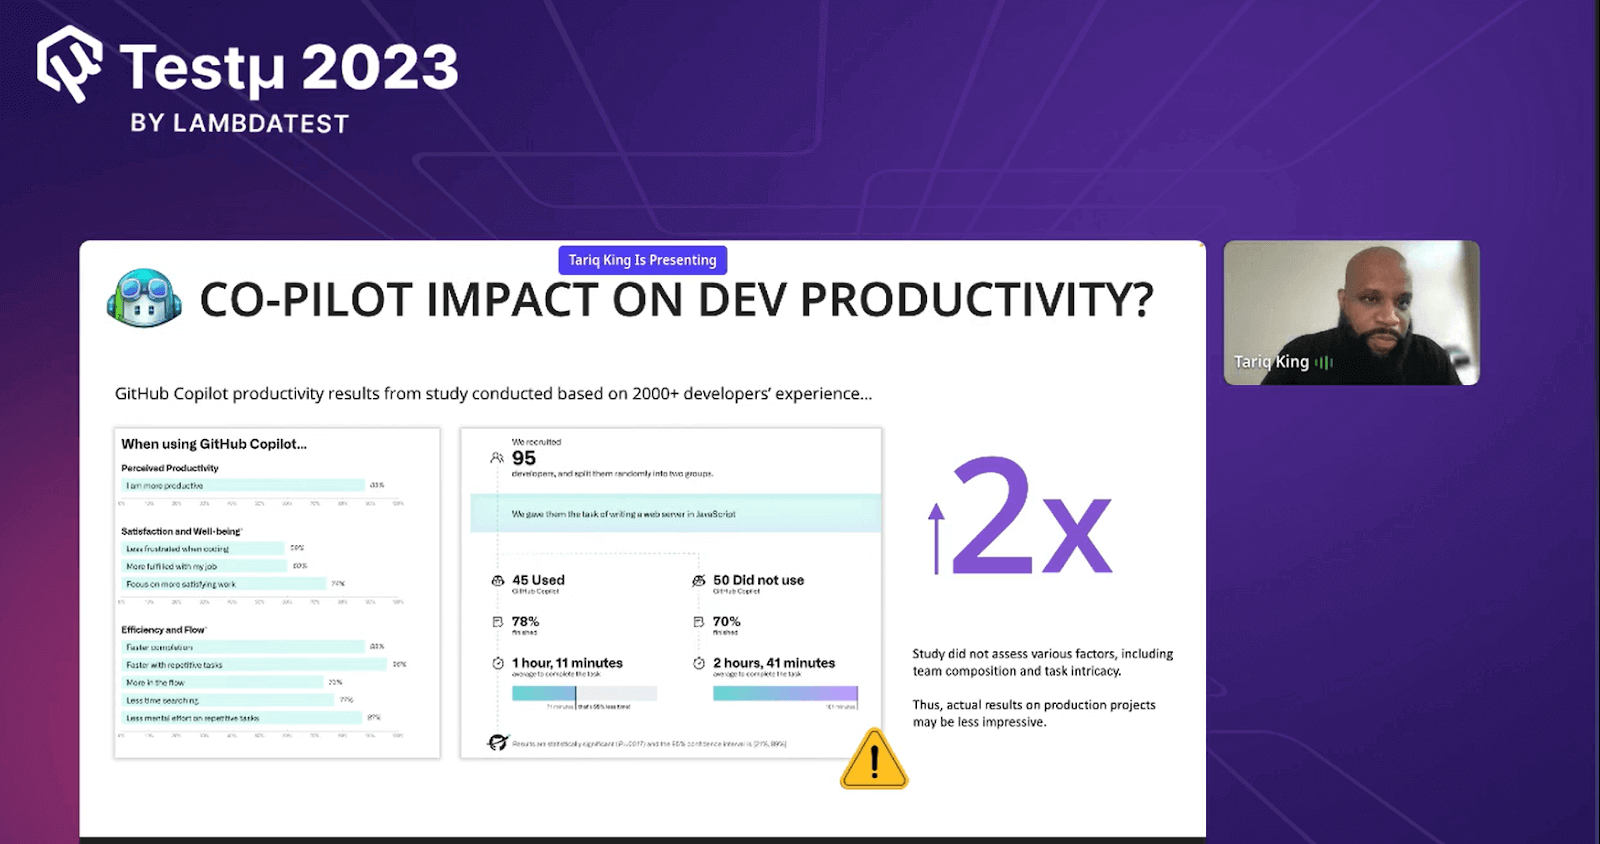 Co-pilot impact on Dev productivity